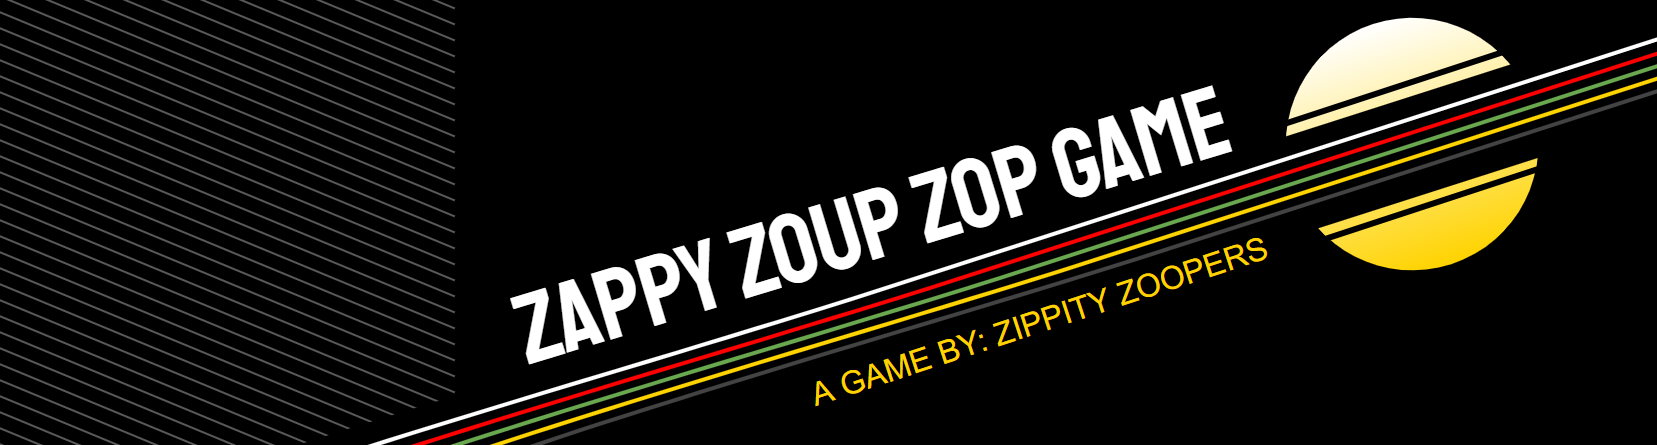 Zappy Zoup Zop Game